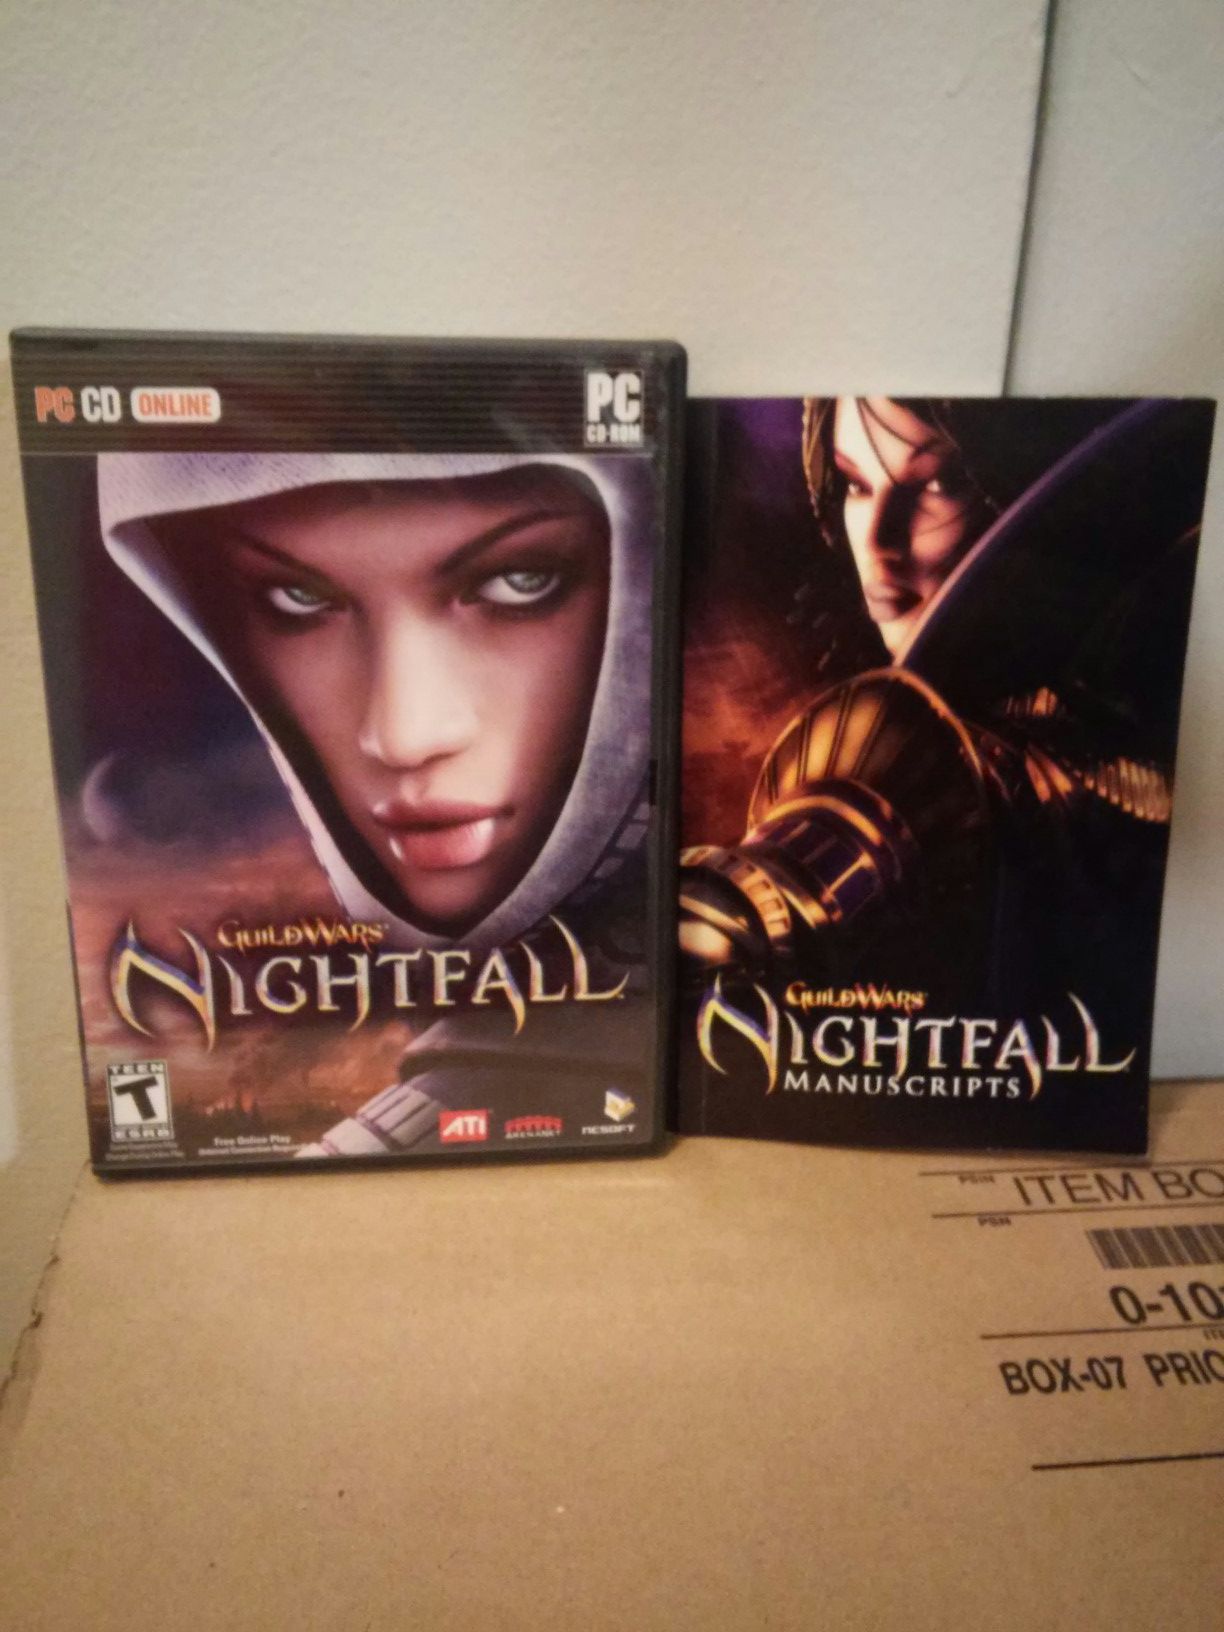 PC CD Guild Wars Nightfall